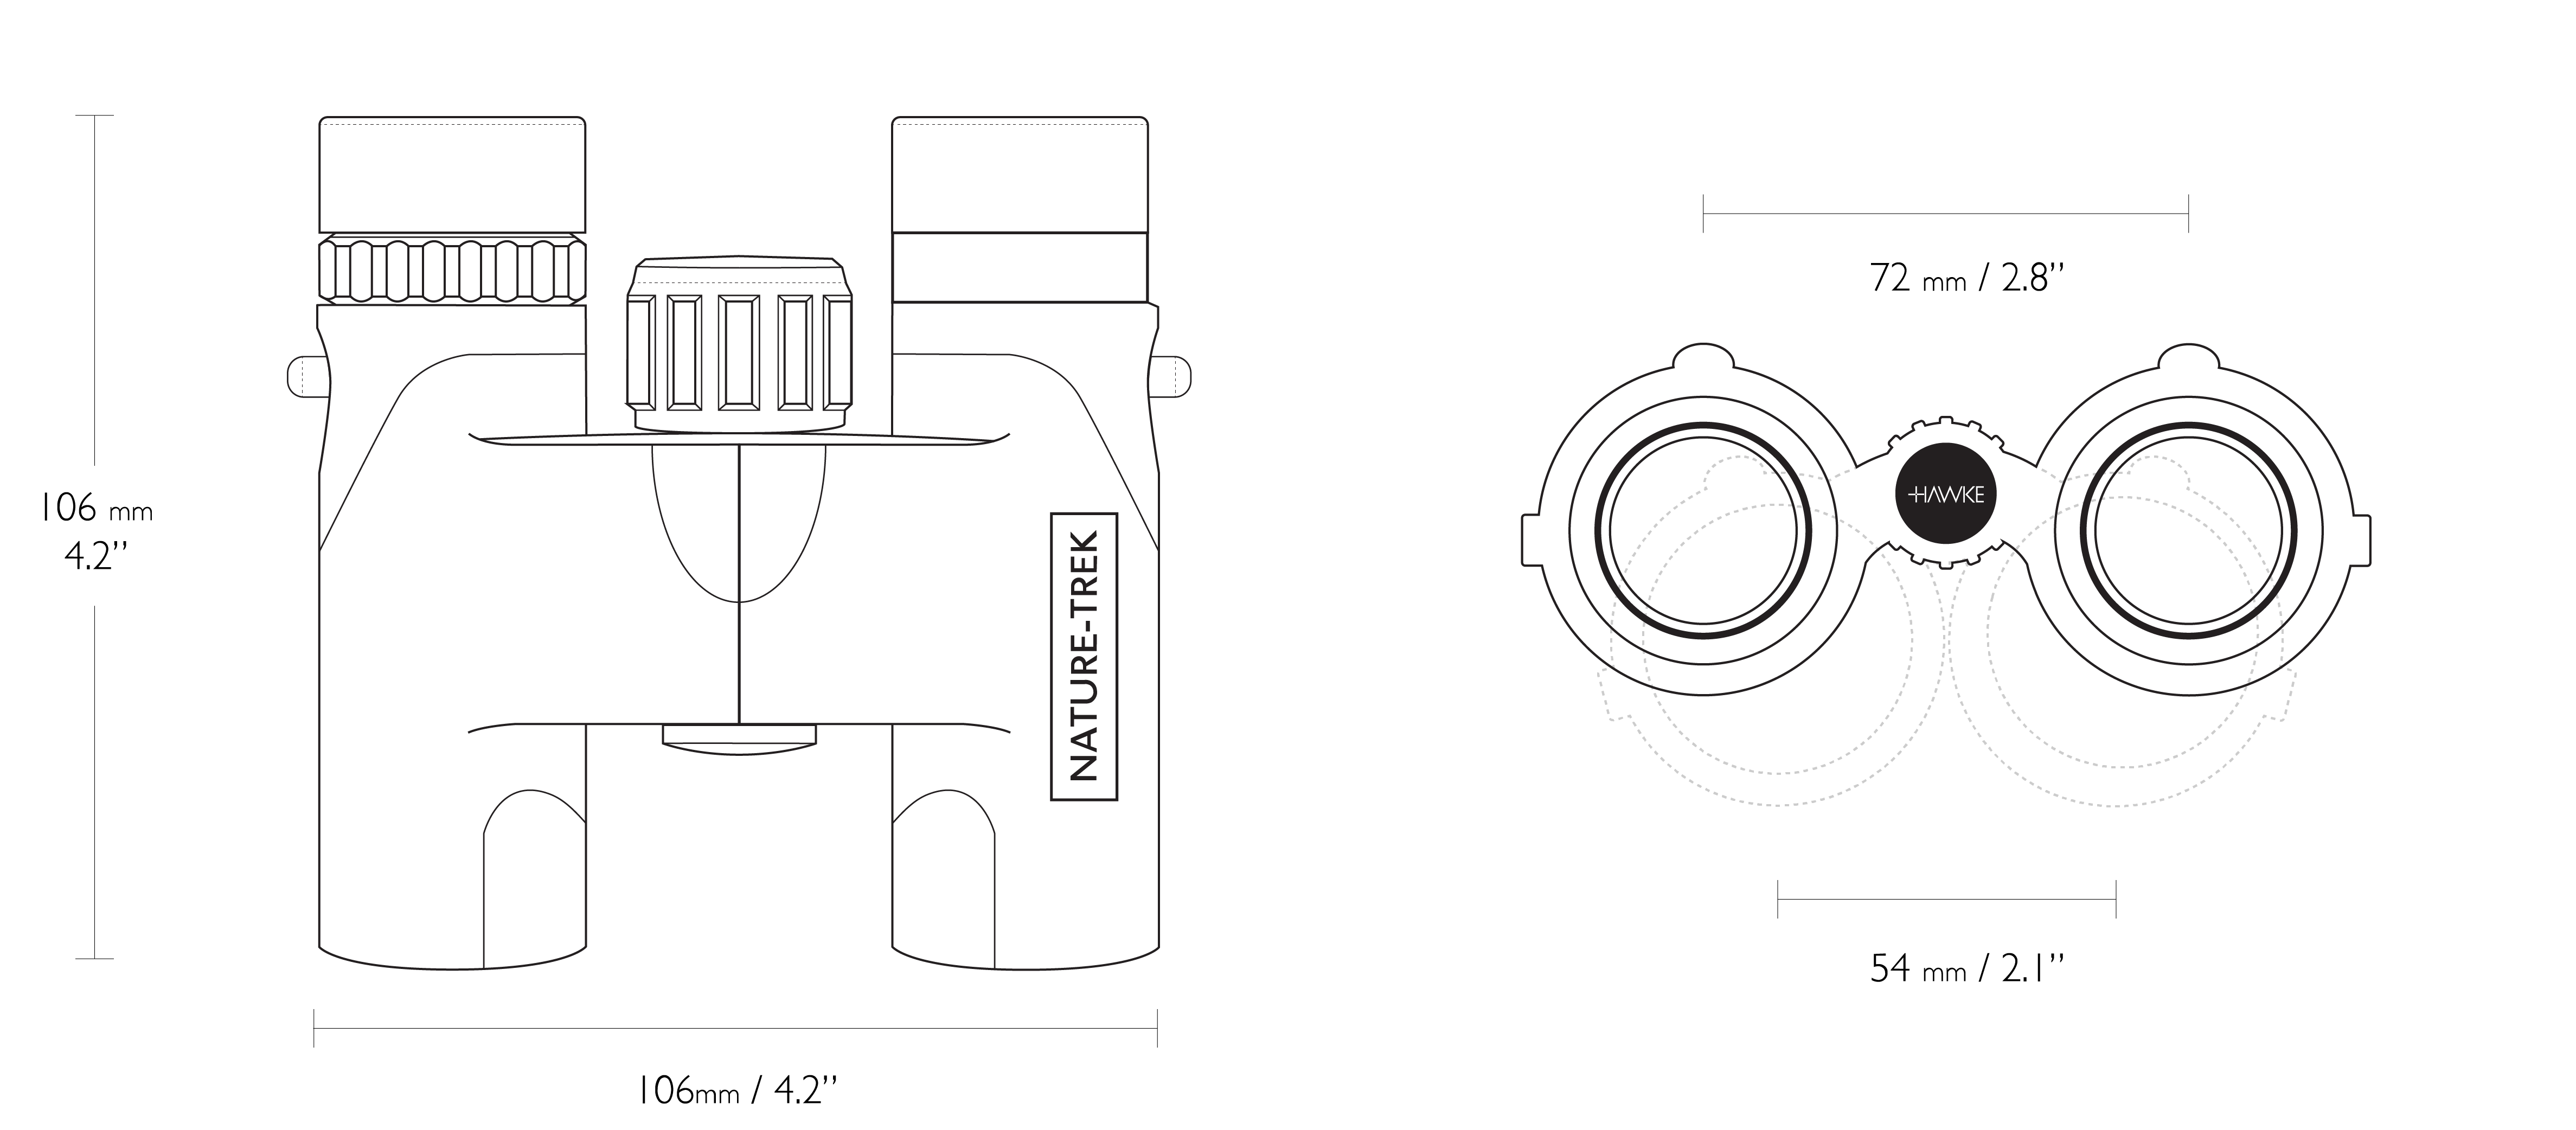 CAD Drawing of the Binoculars